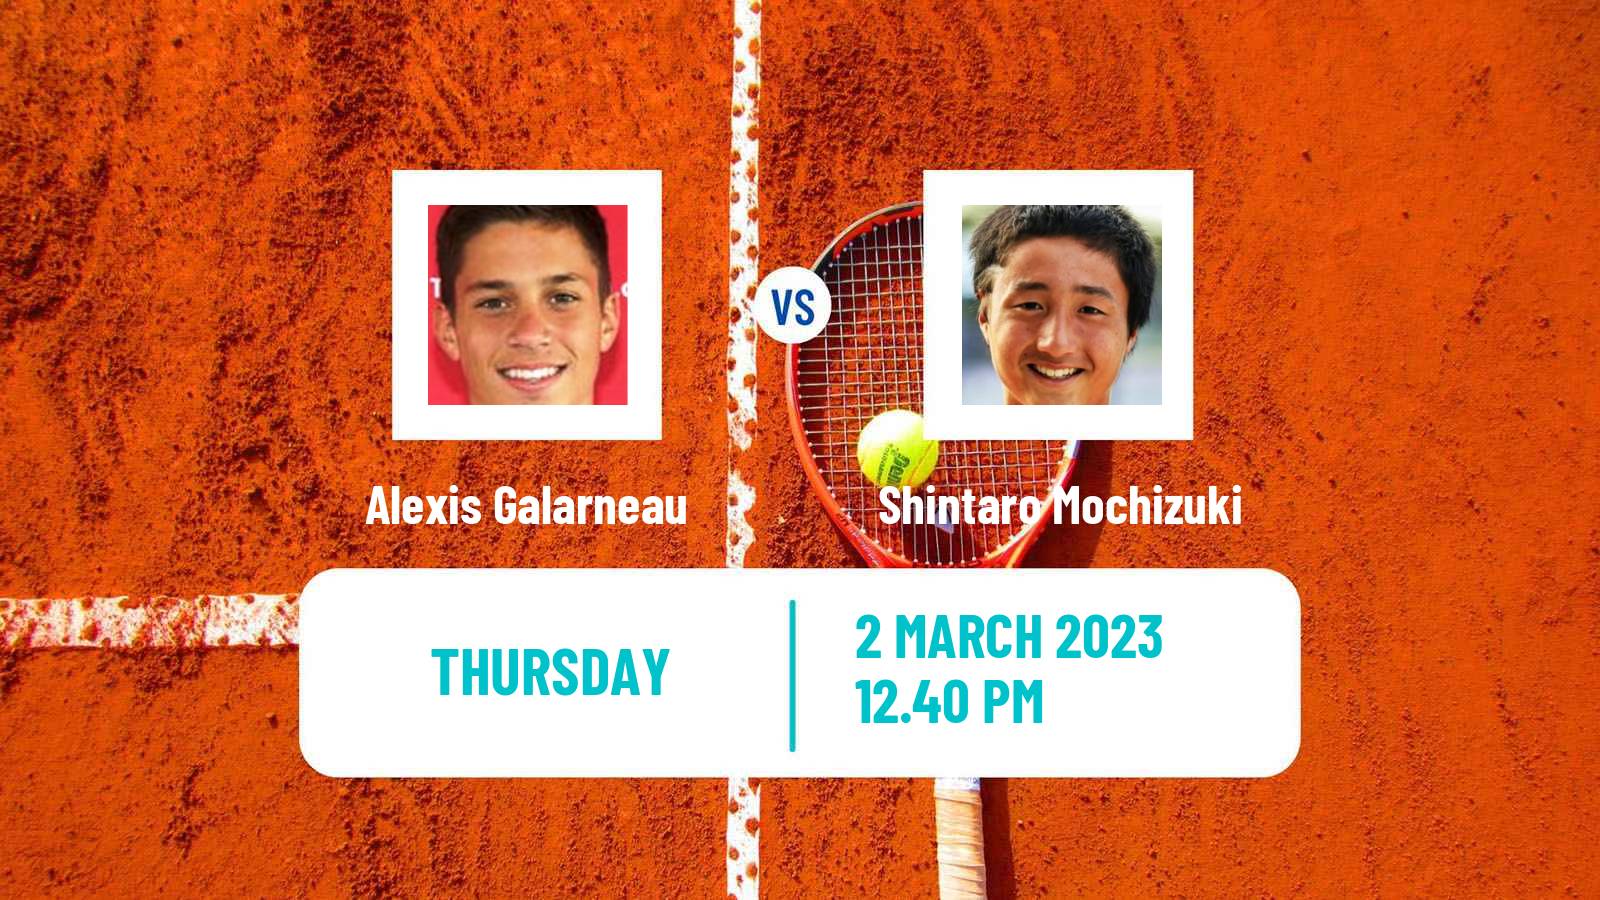 Tennis ATP Challenger Alexis Galarneau - Shintaro Mochizuki